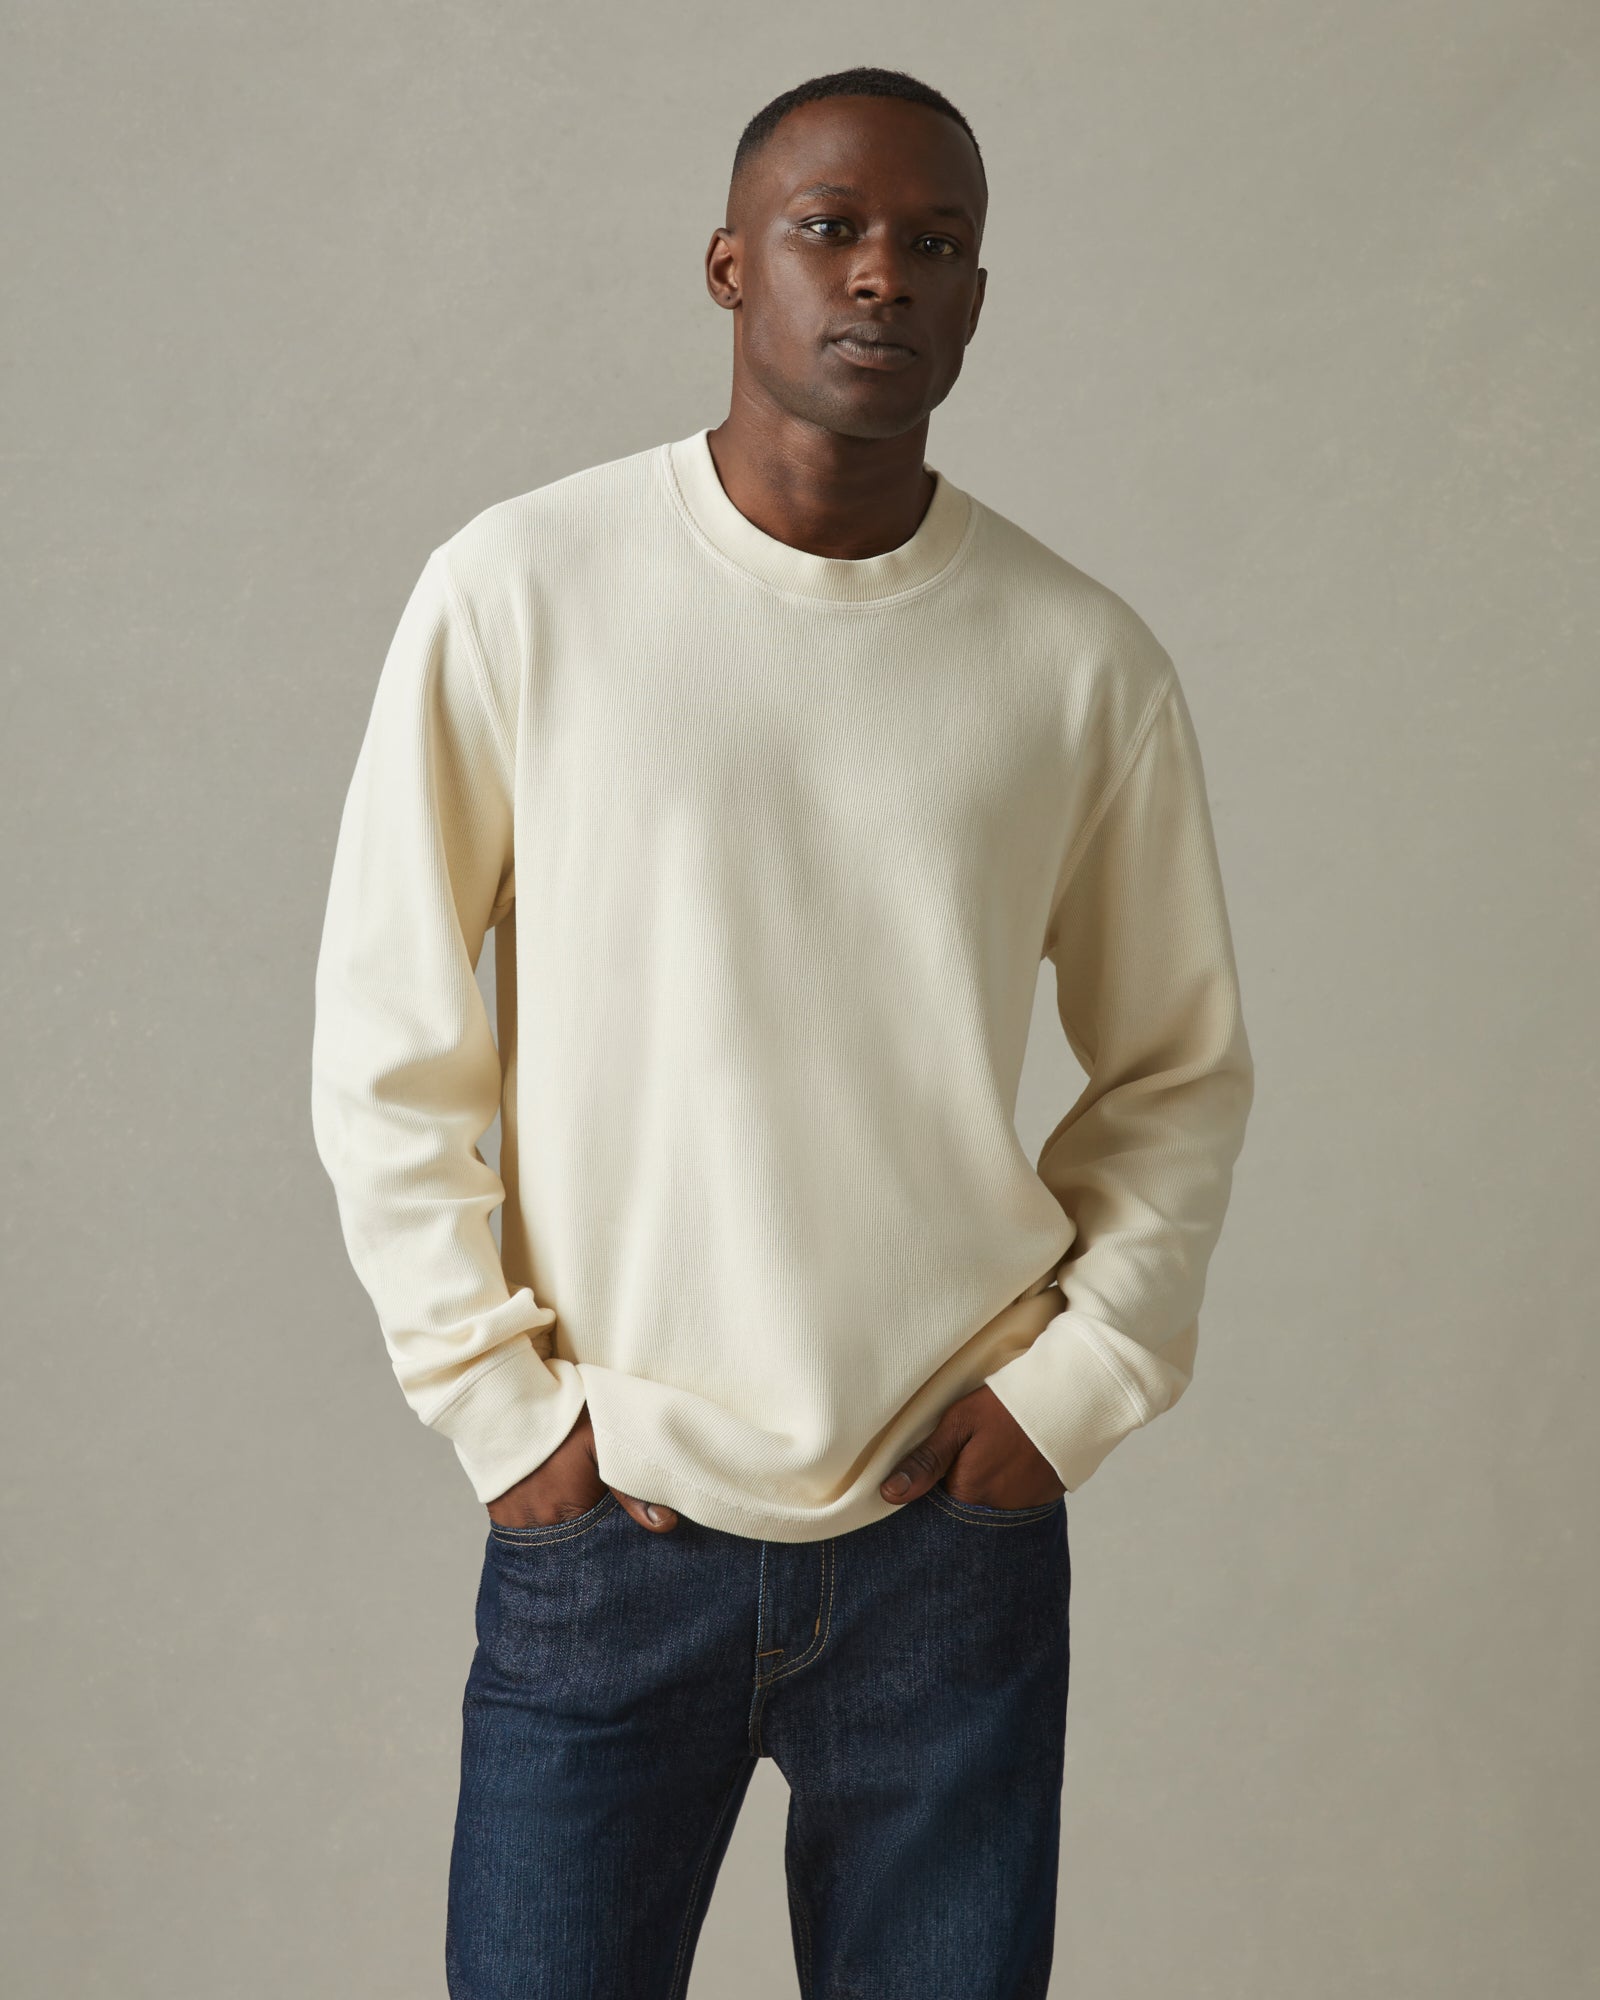 J.Crew Slim Cotton Cashmere Crewneck Sweater, $49, J.Crew